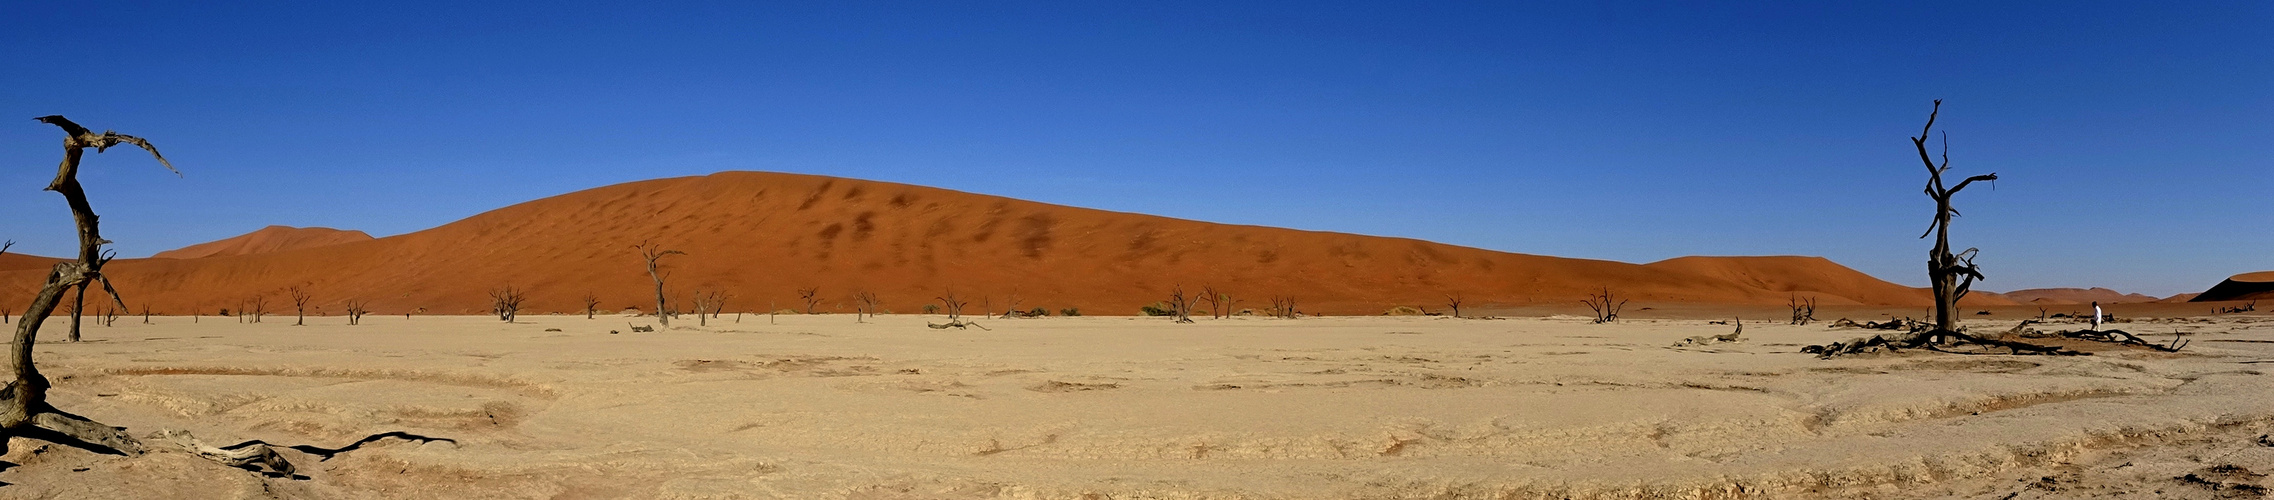 Sossusflei,Namibia